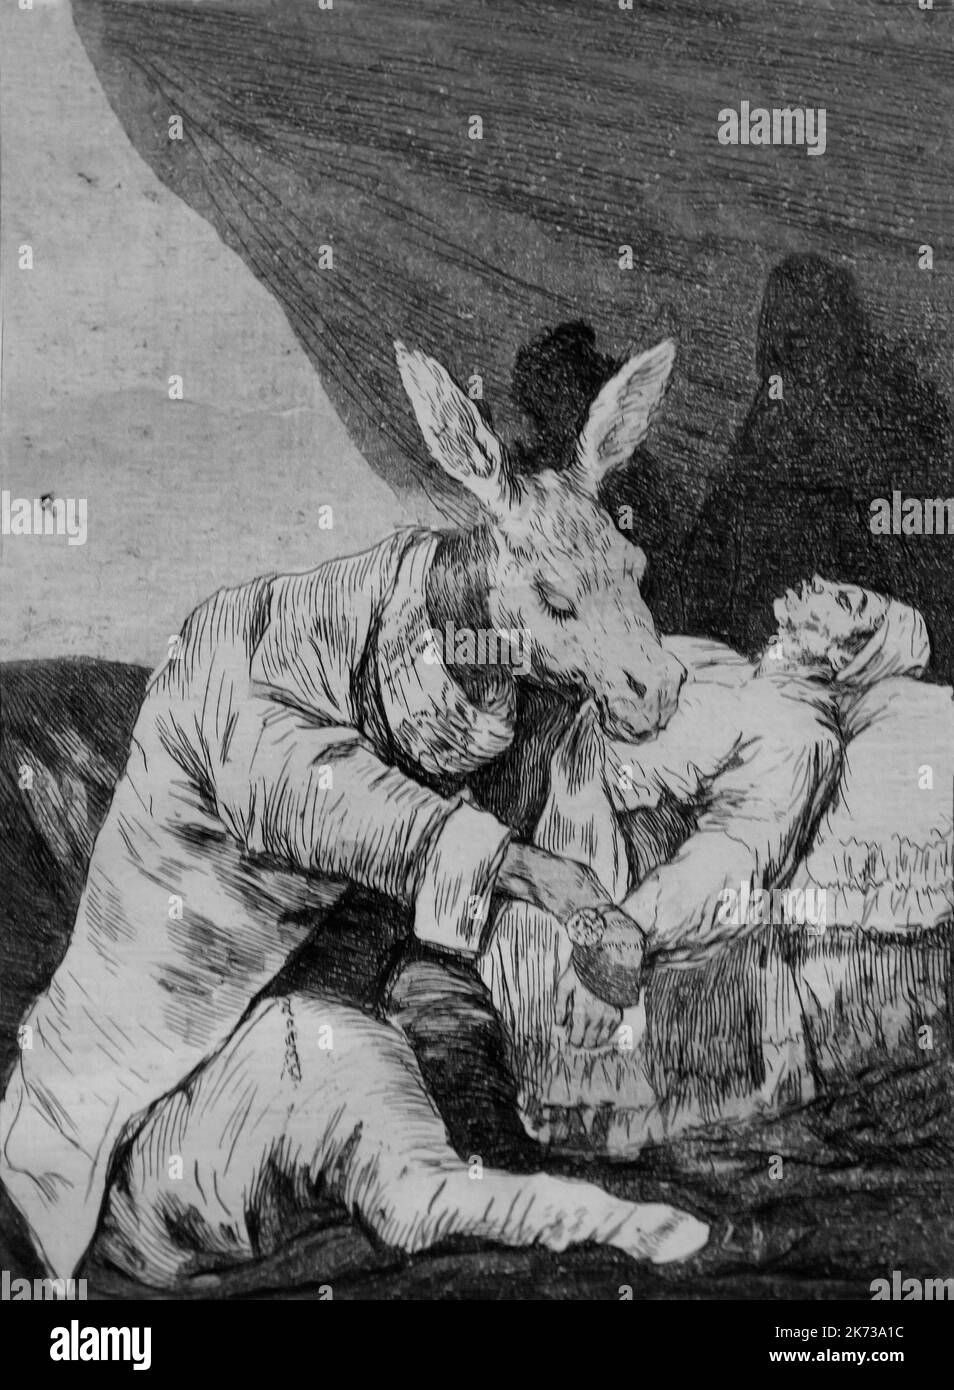 Of What Ill WIll He Die? Francisco Goya, Los Caprichos, 1797-1798, Museum Berggruen, Berlin, Germany, Europe Stock Photo